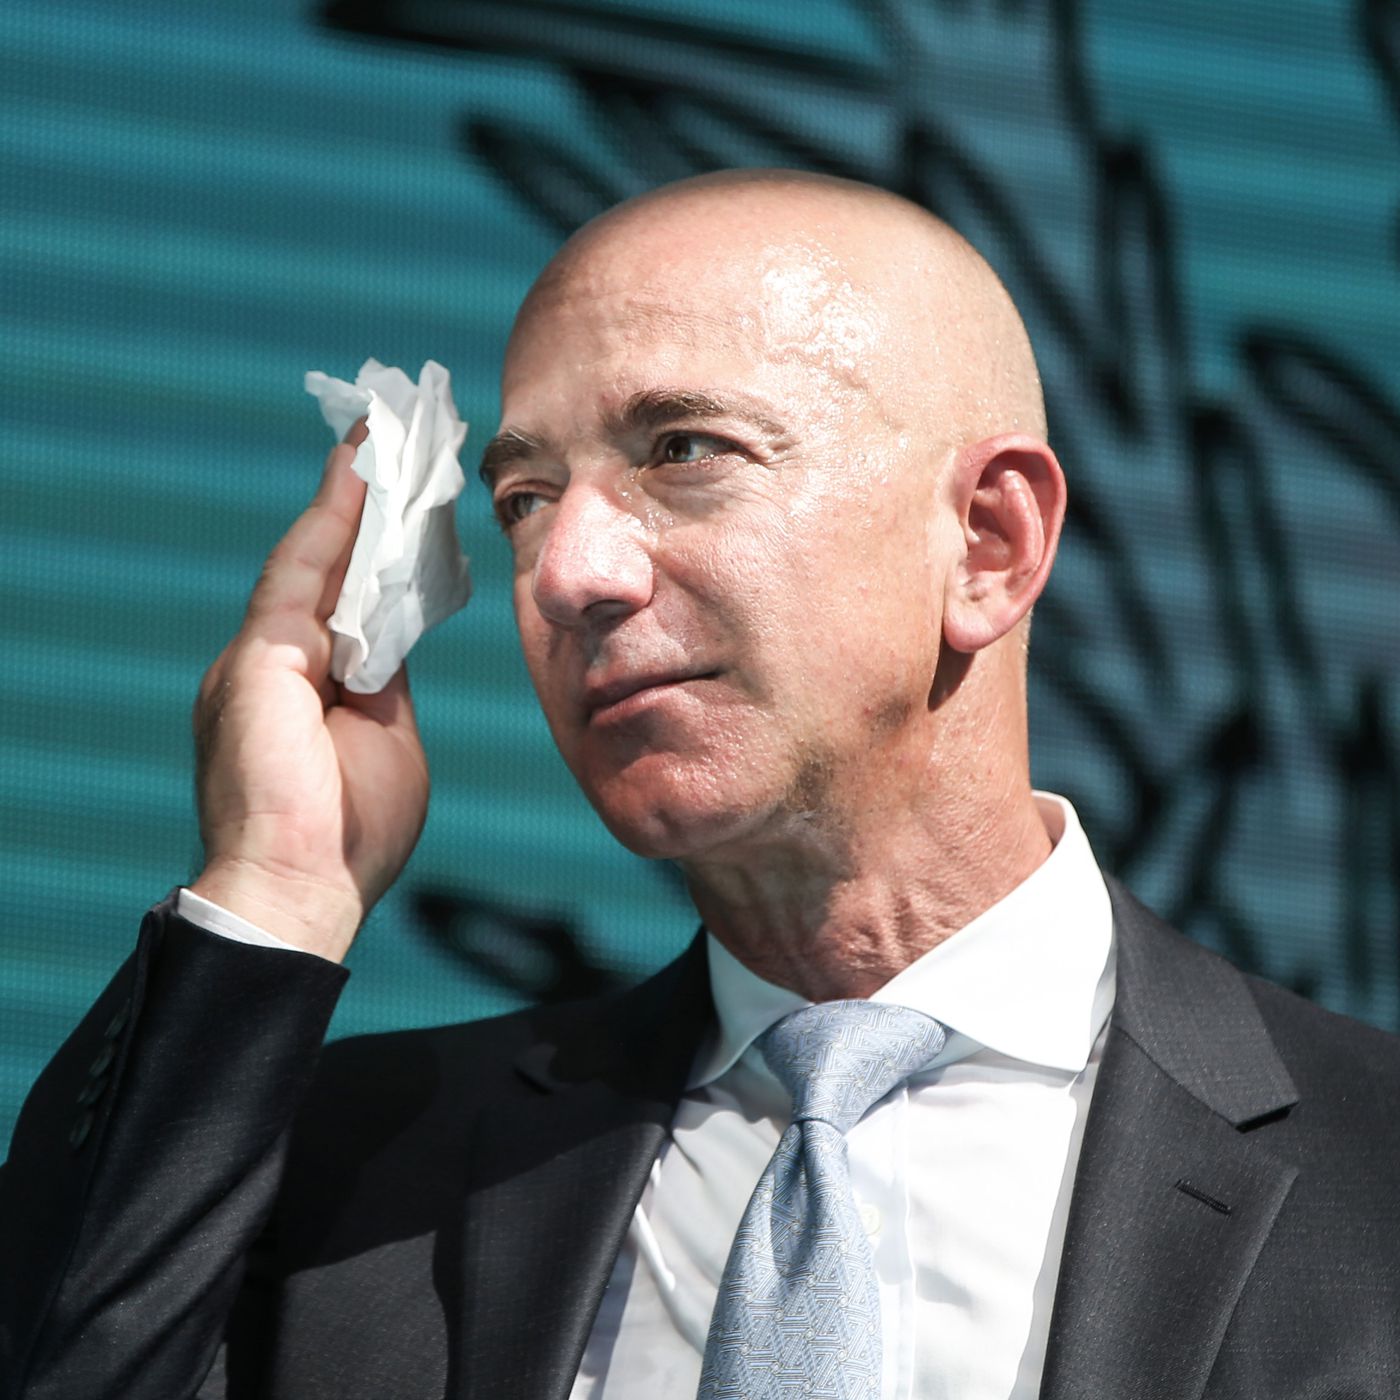 Bezos Blamed For Seattle Heat Wave